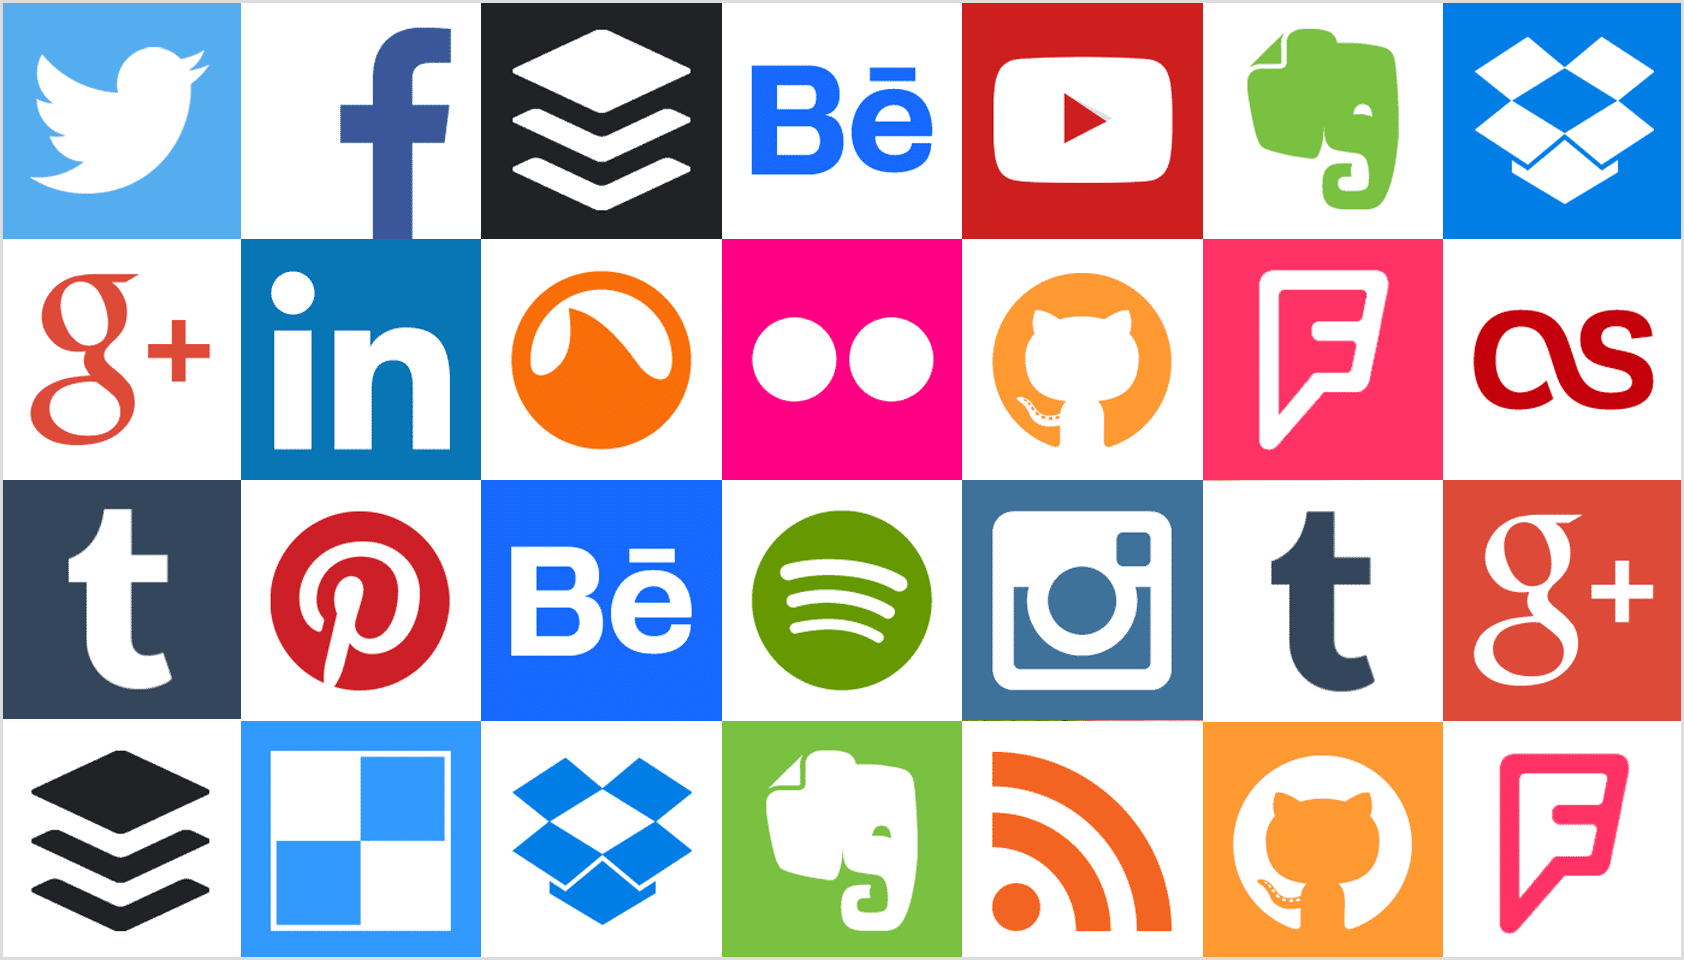 Social Standard Square icon sets